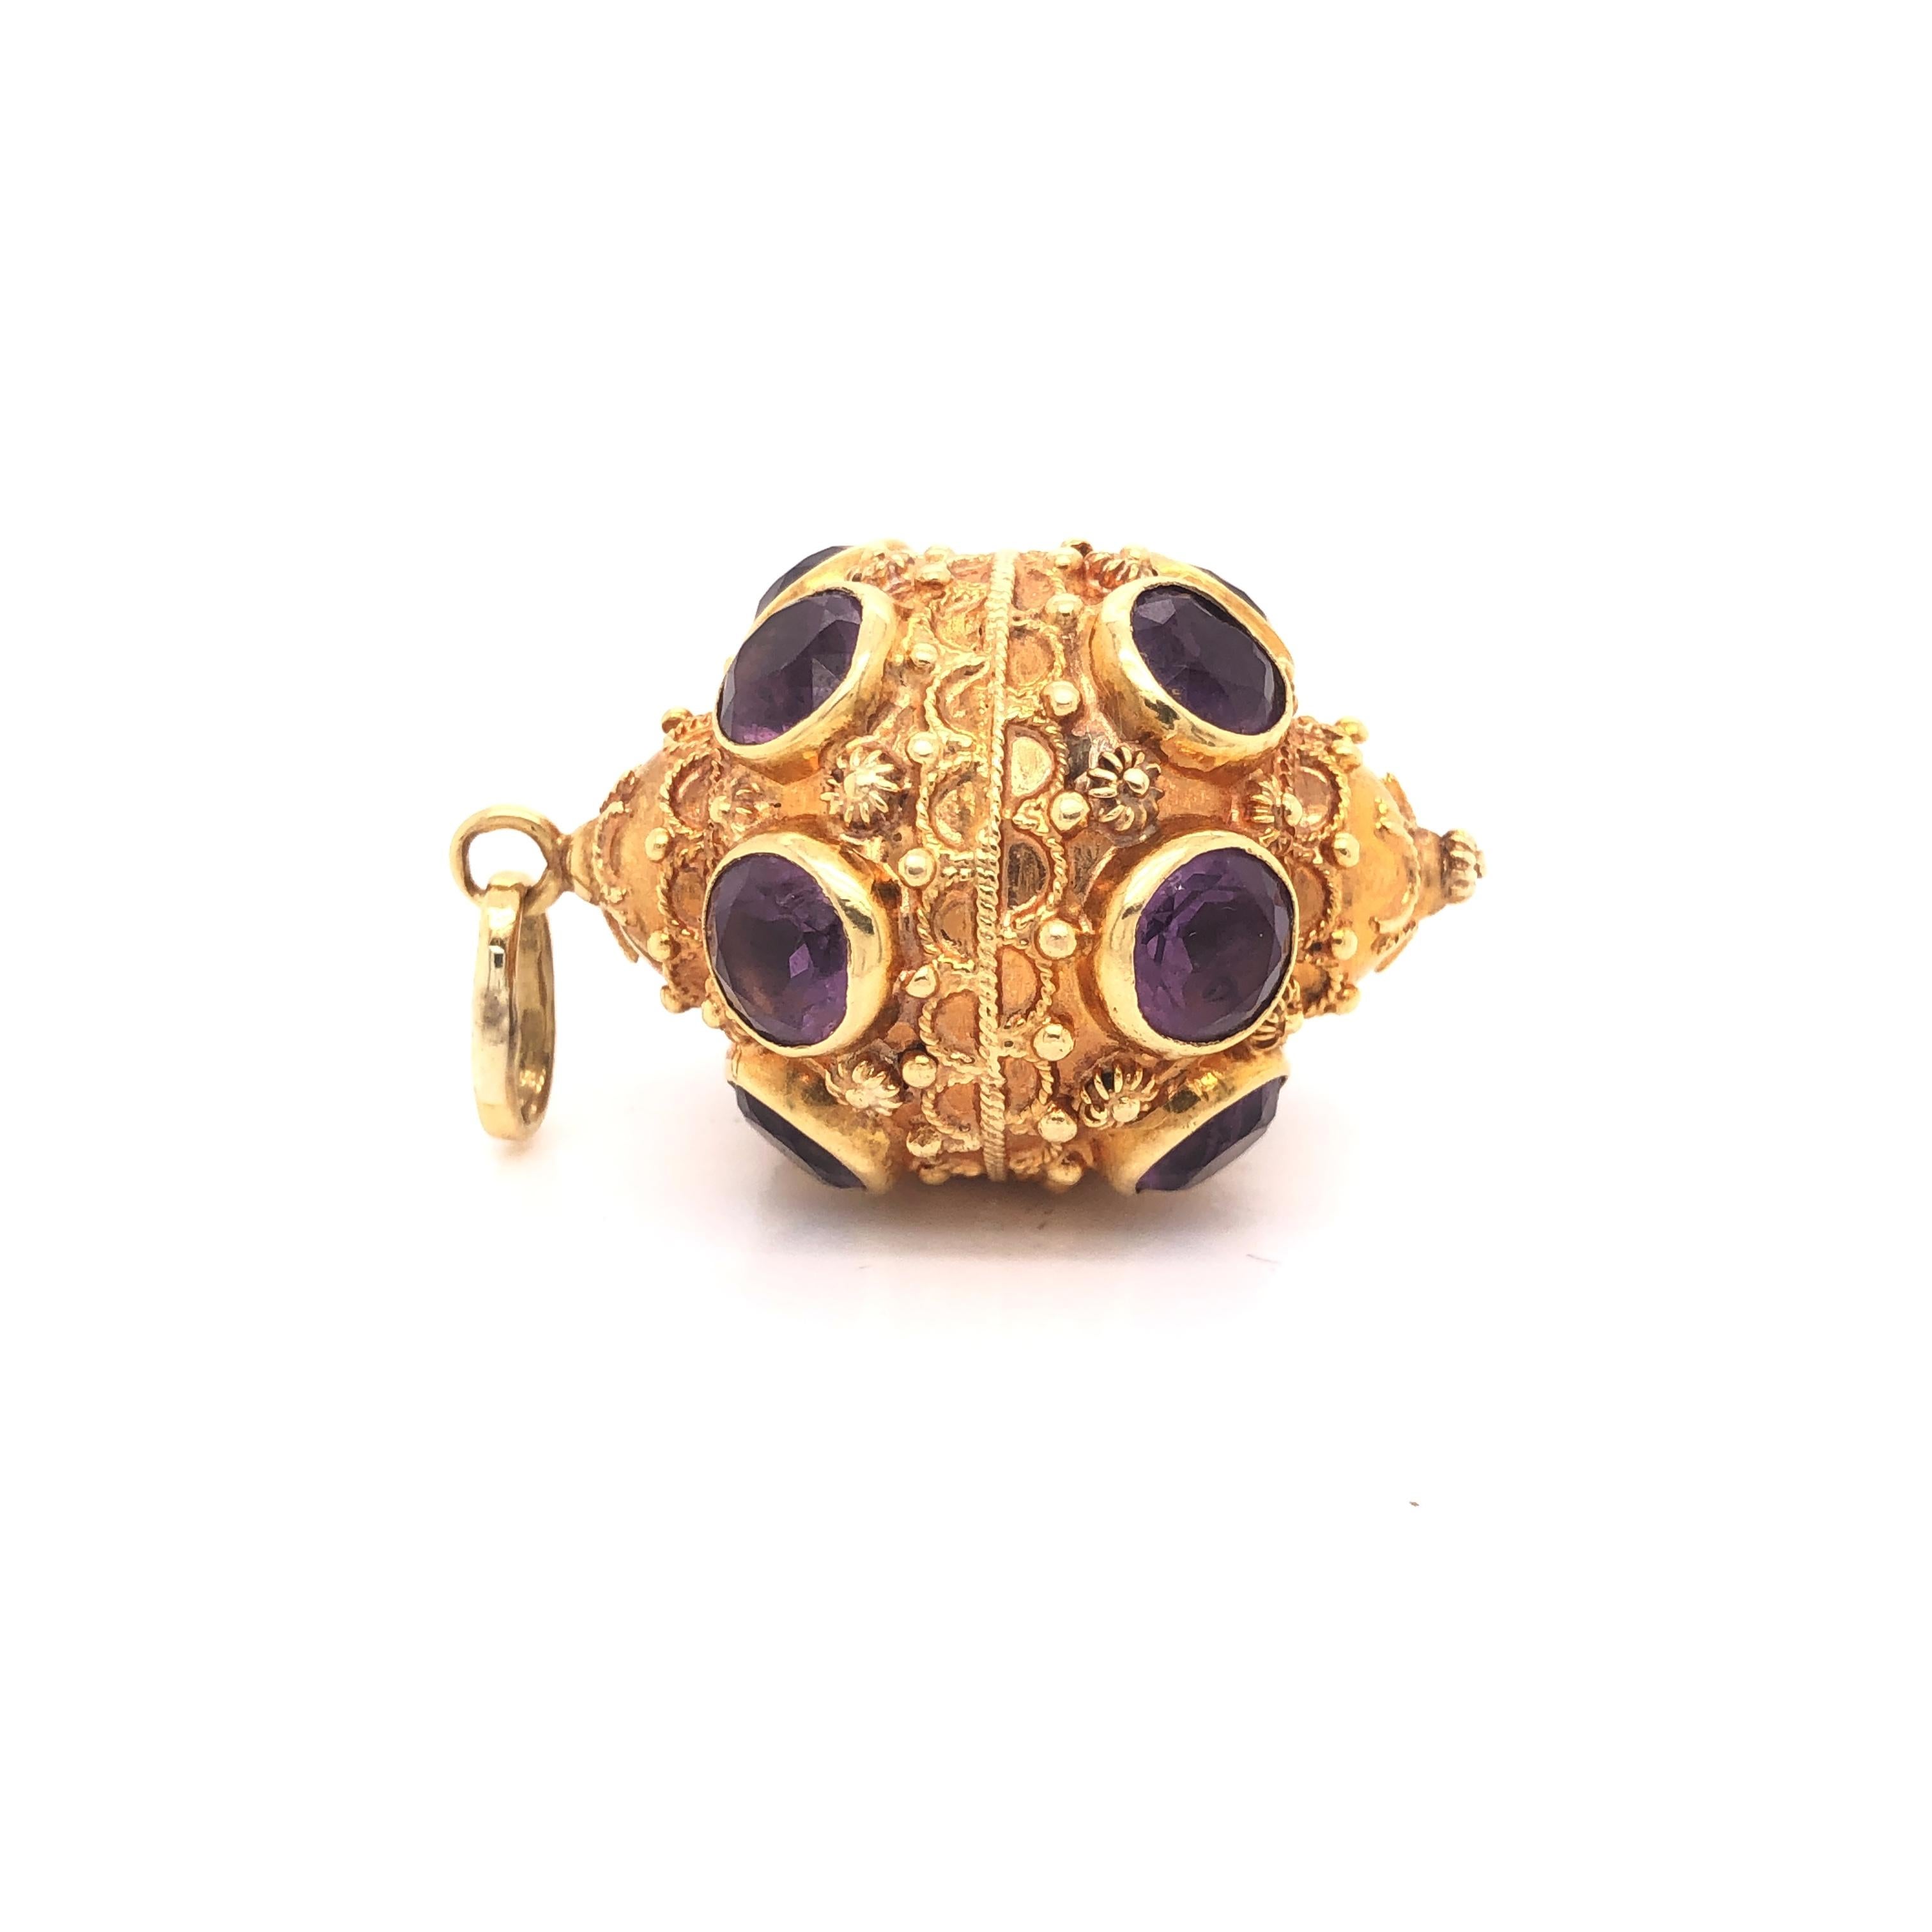 Etruscan Revival Etruscan Style 18 Karat Yellow Gold Jumbo Charm Pendant Amethyst Gemstones